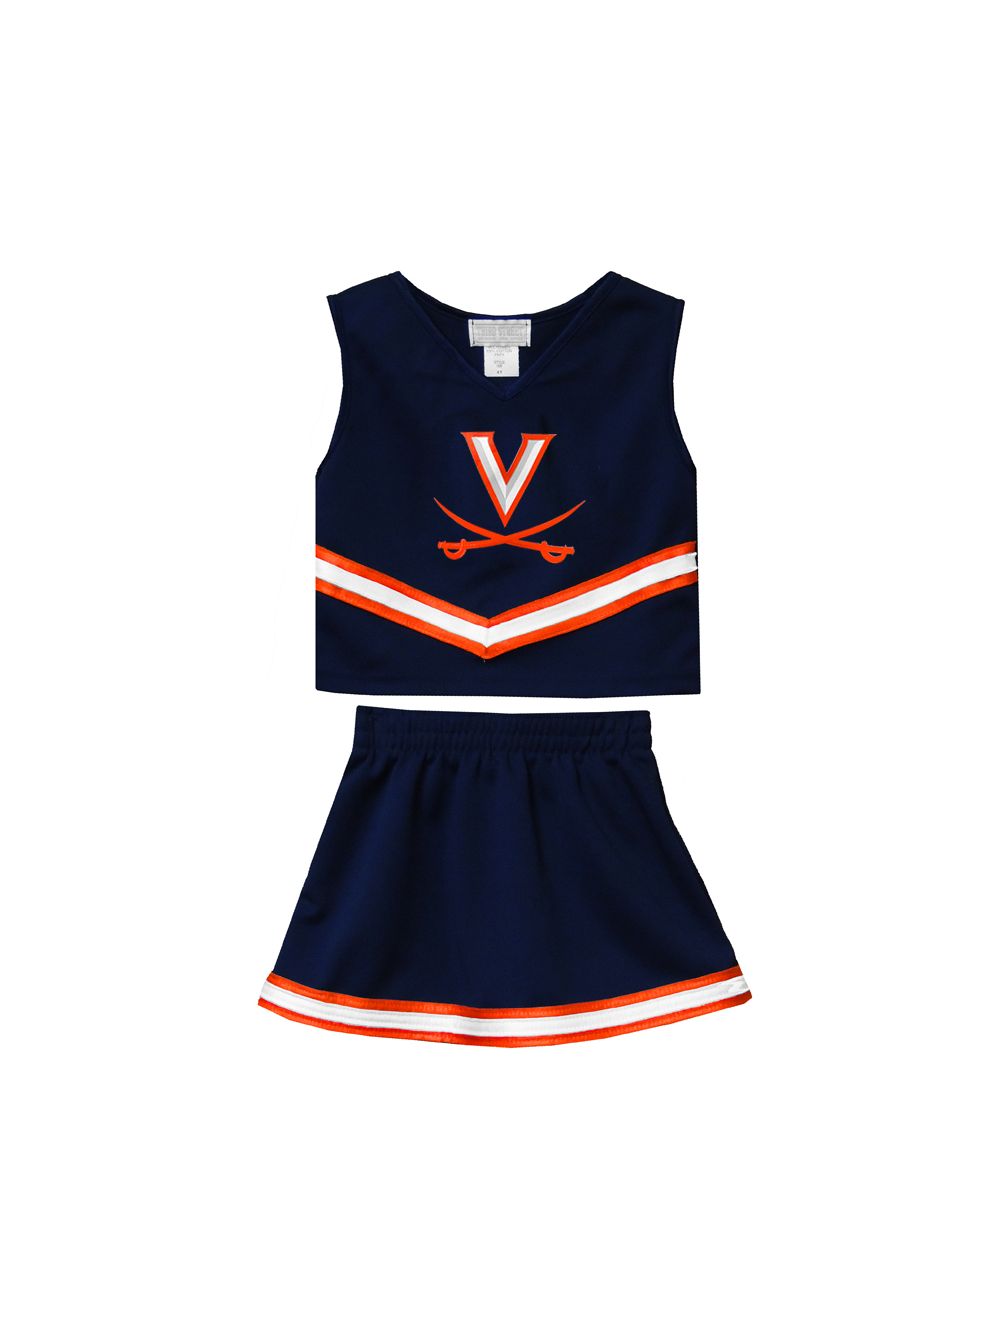 Women's Skirt Suit Basketball Cheerleading Jersey Two Piece Set